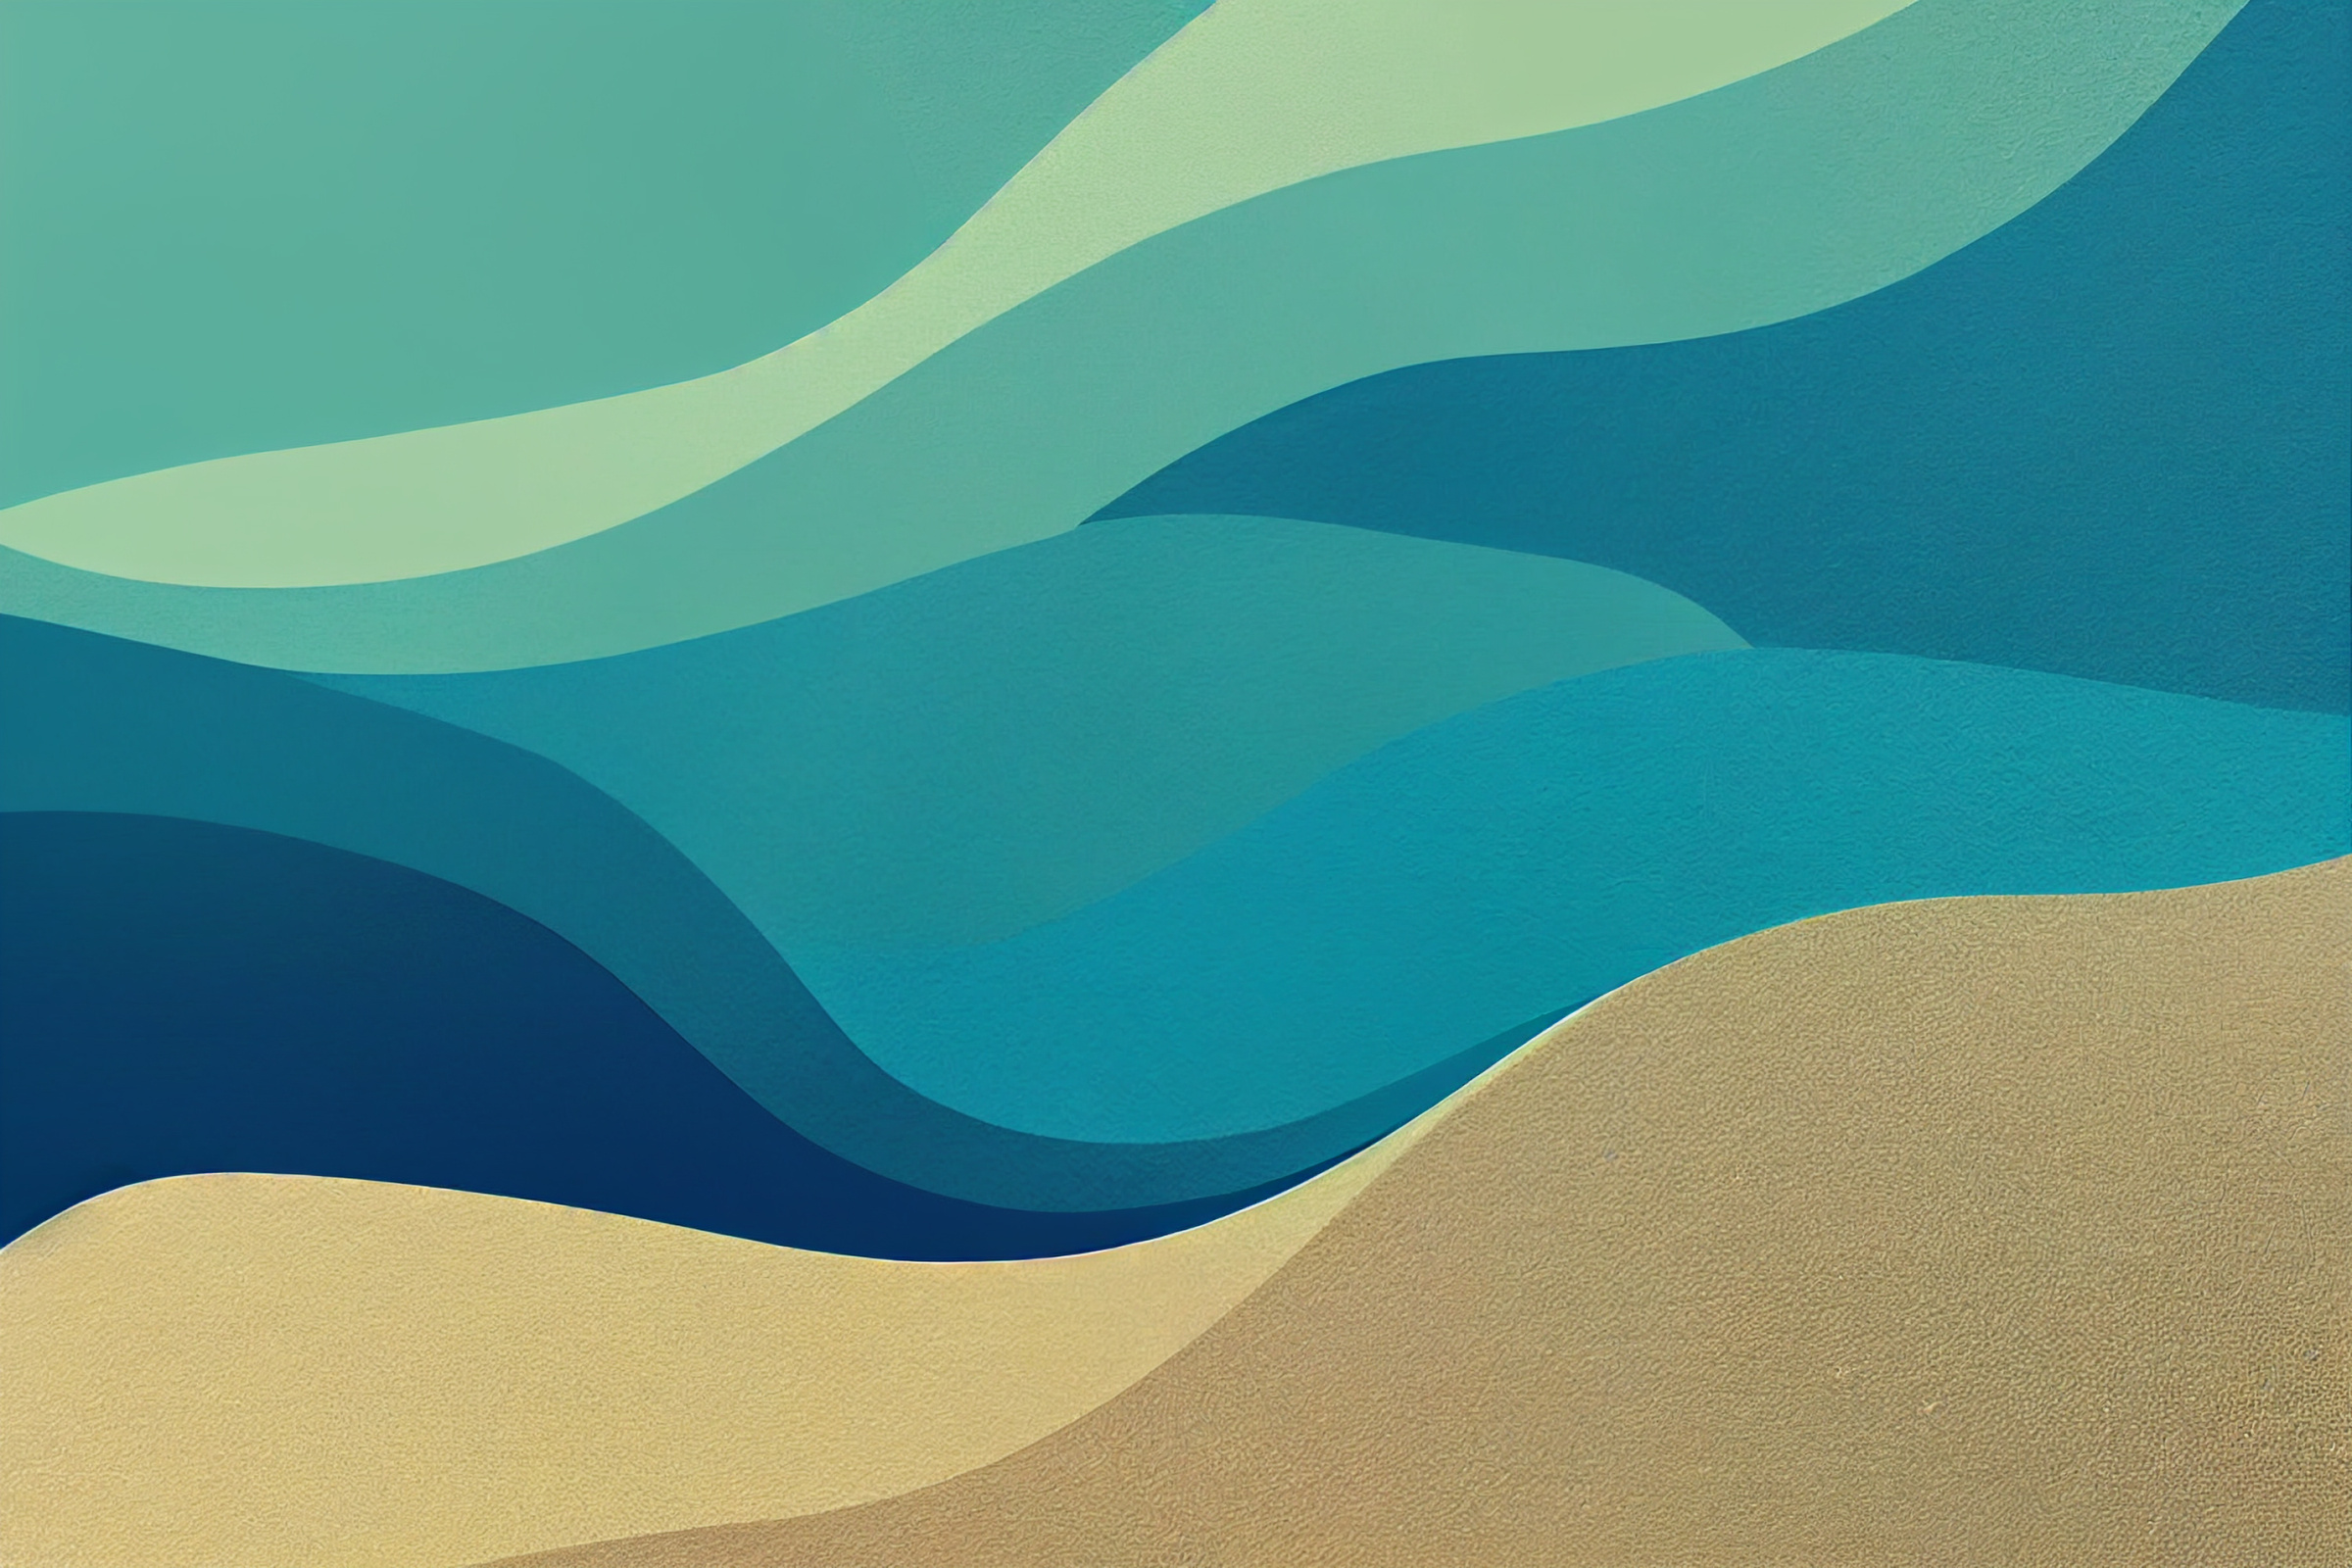 Flat colors of taupe and aqua creative background illustration